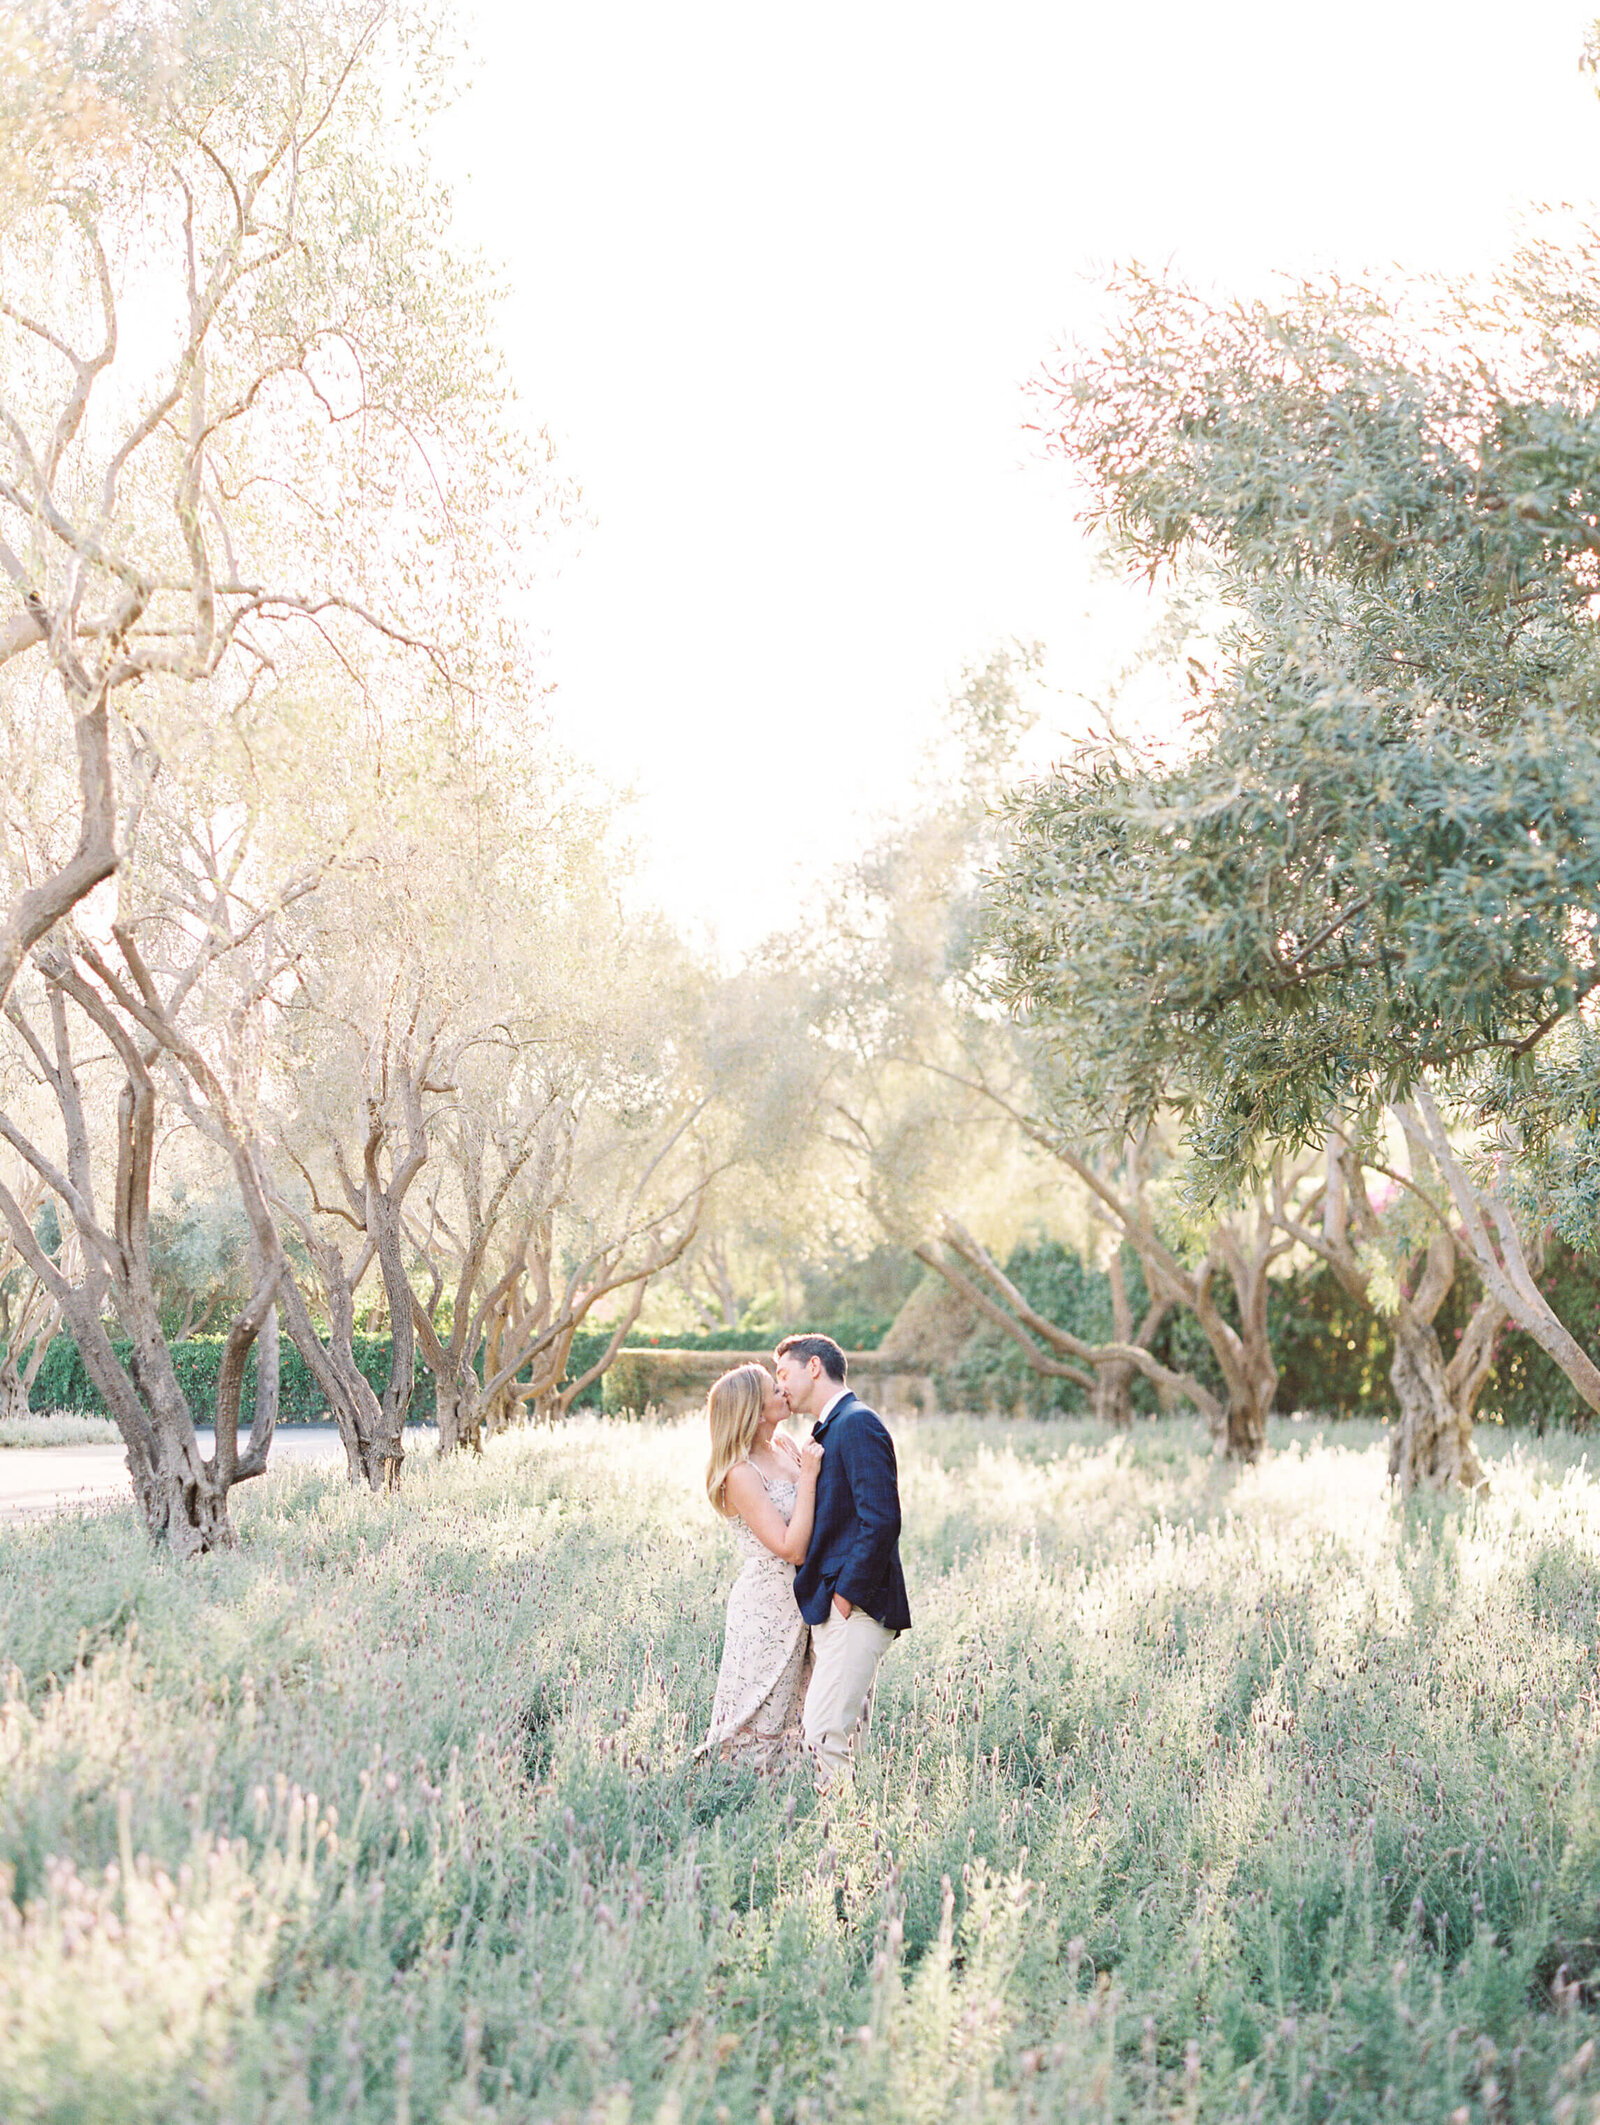 Lisa-Leanne-Photography_San-Ysidro-Ranch-Engagement_destination-wedding-photographer_southern-california-wedding-photographer_6